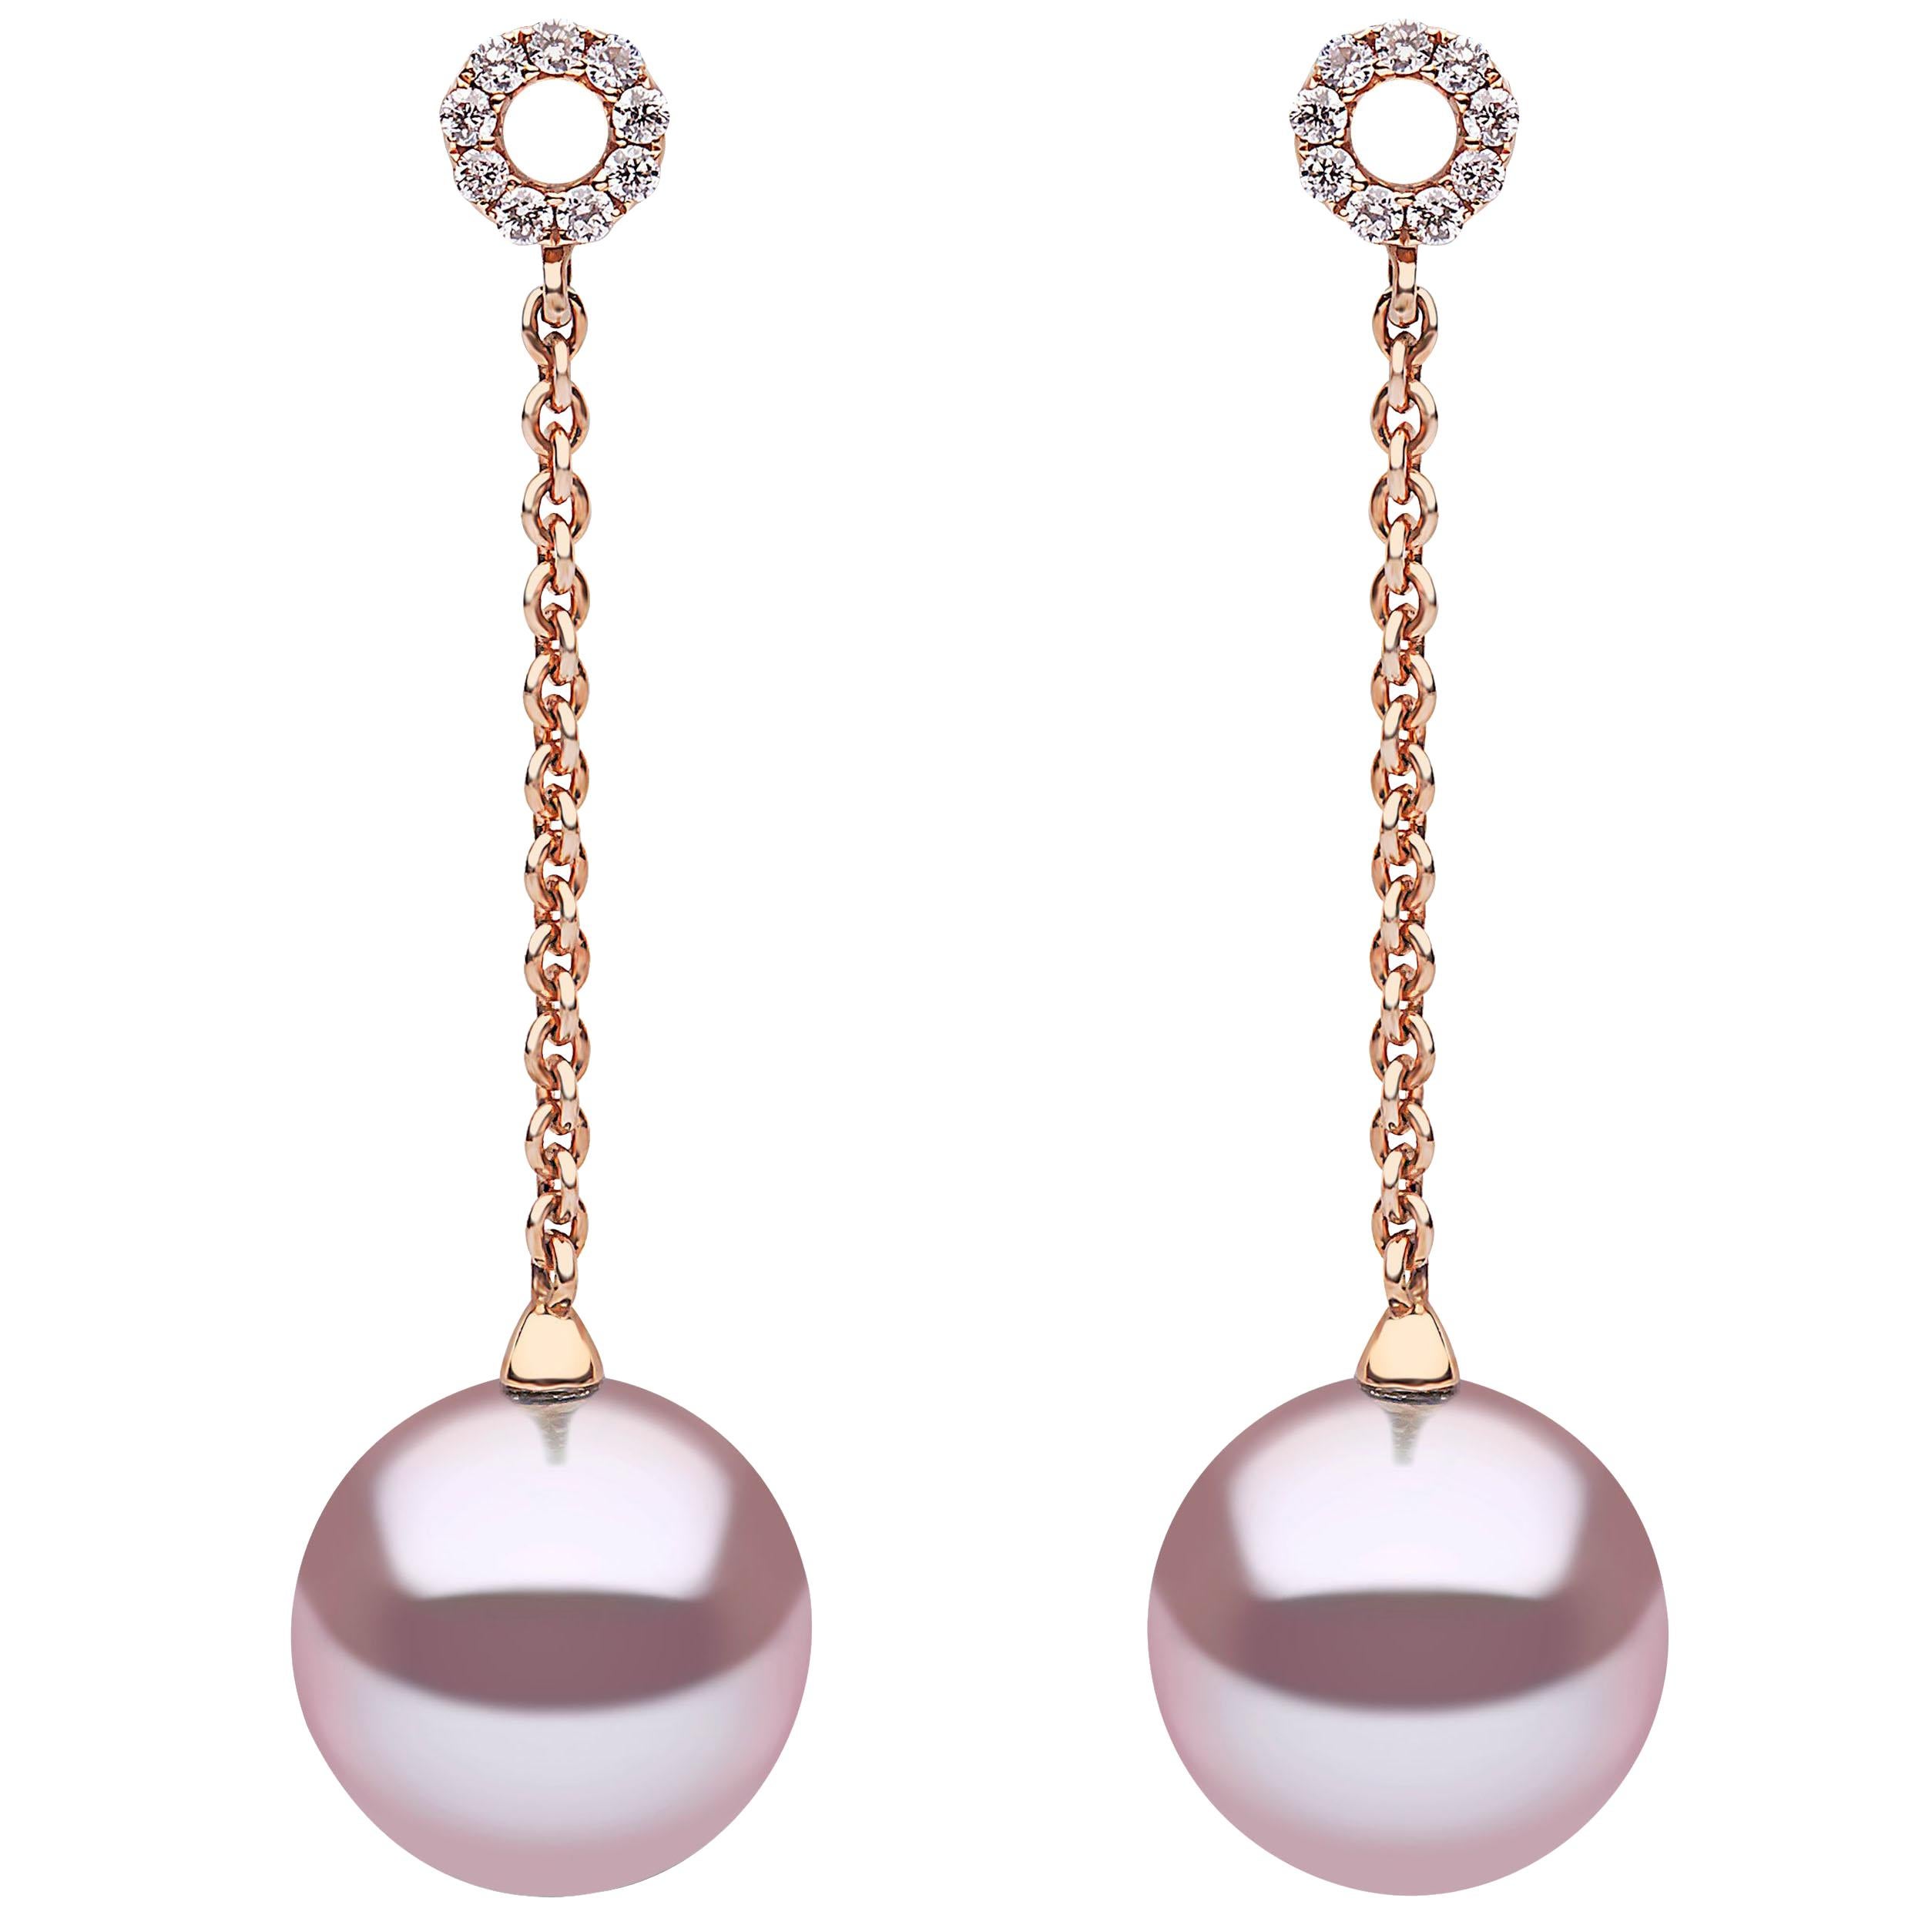 Yoko London Pink Freshwater Pearl and Diamond Earrings in 18 Karat Rose Gold